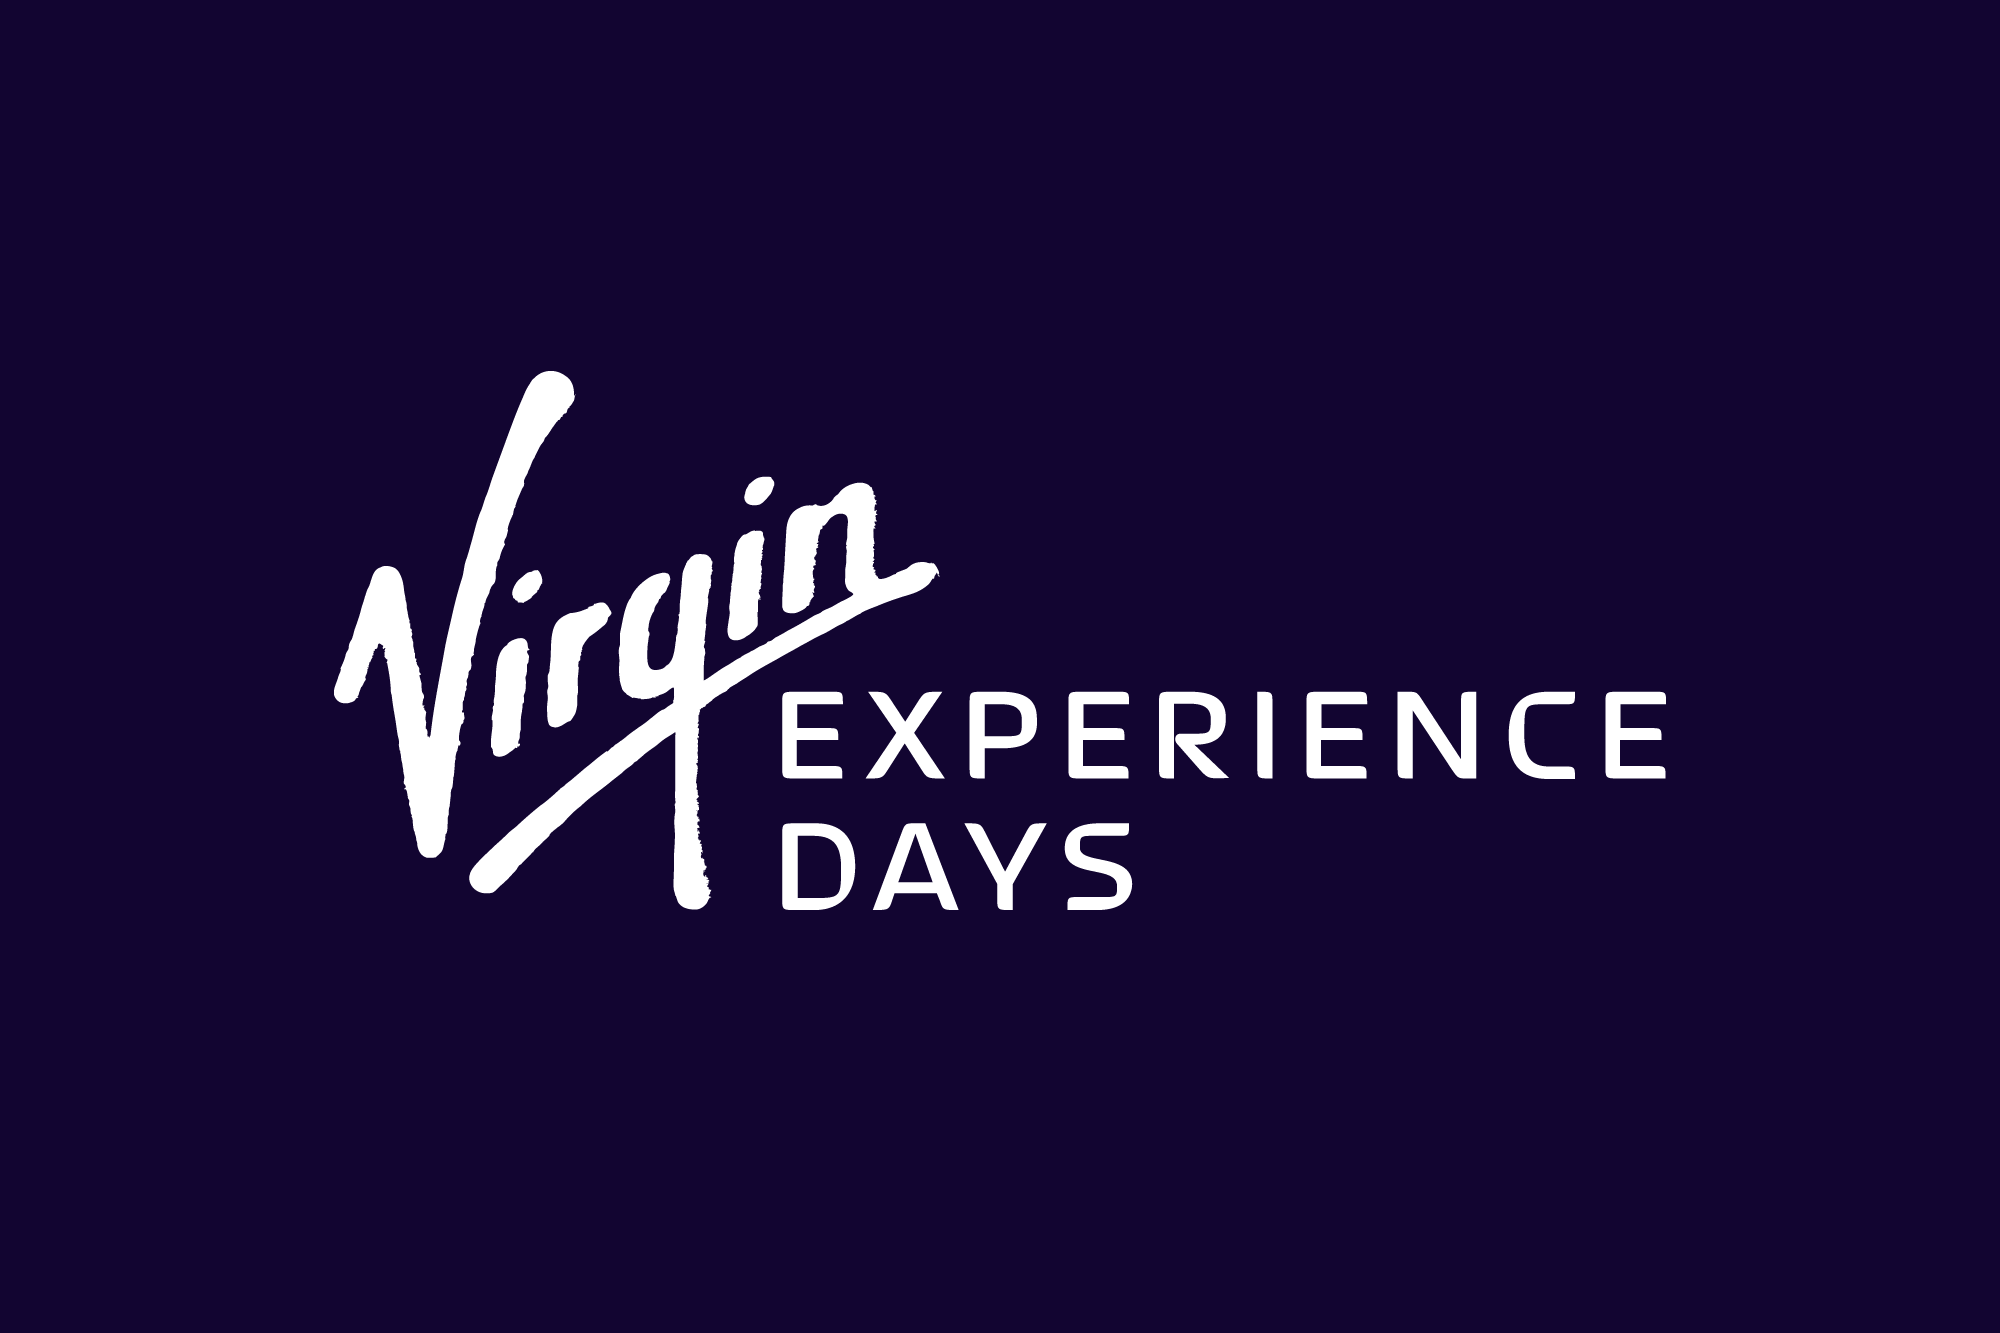 Virgin Experience Days Logo - White on Midnight Blue